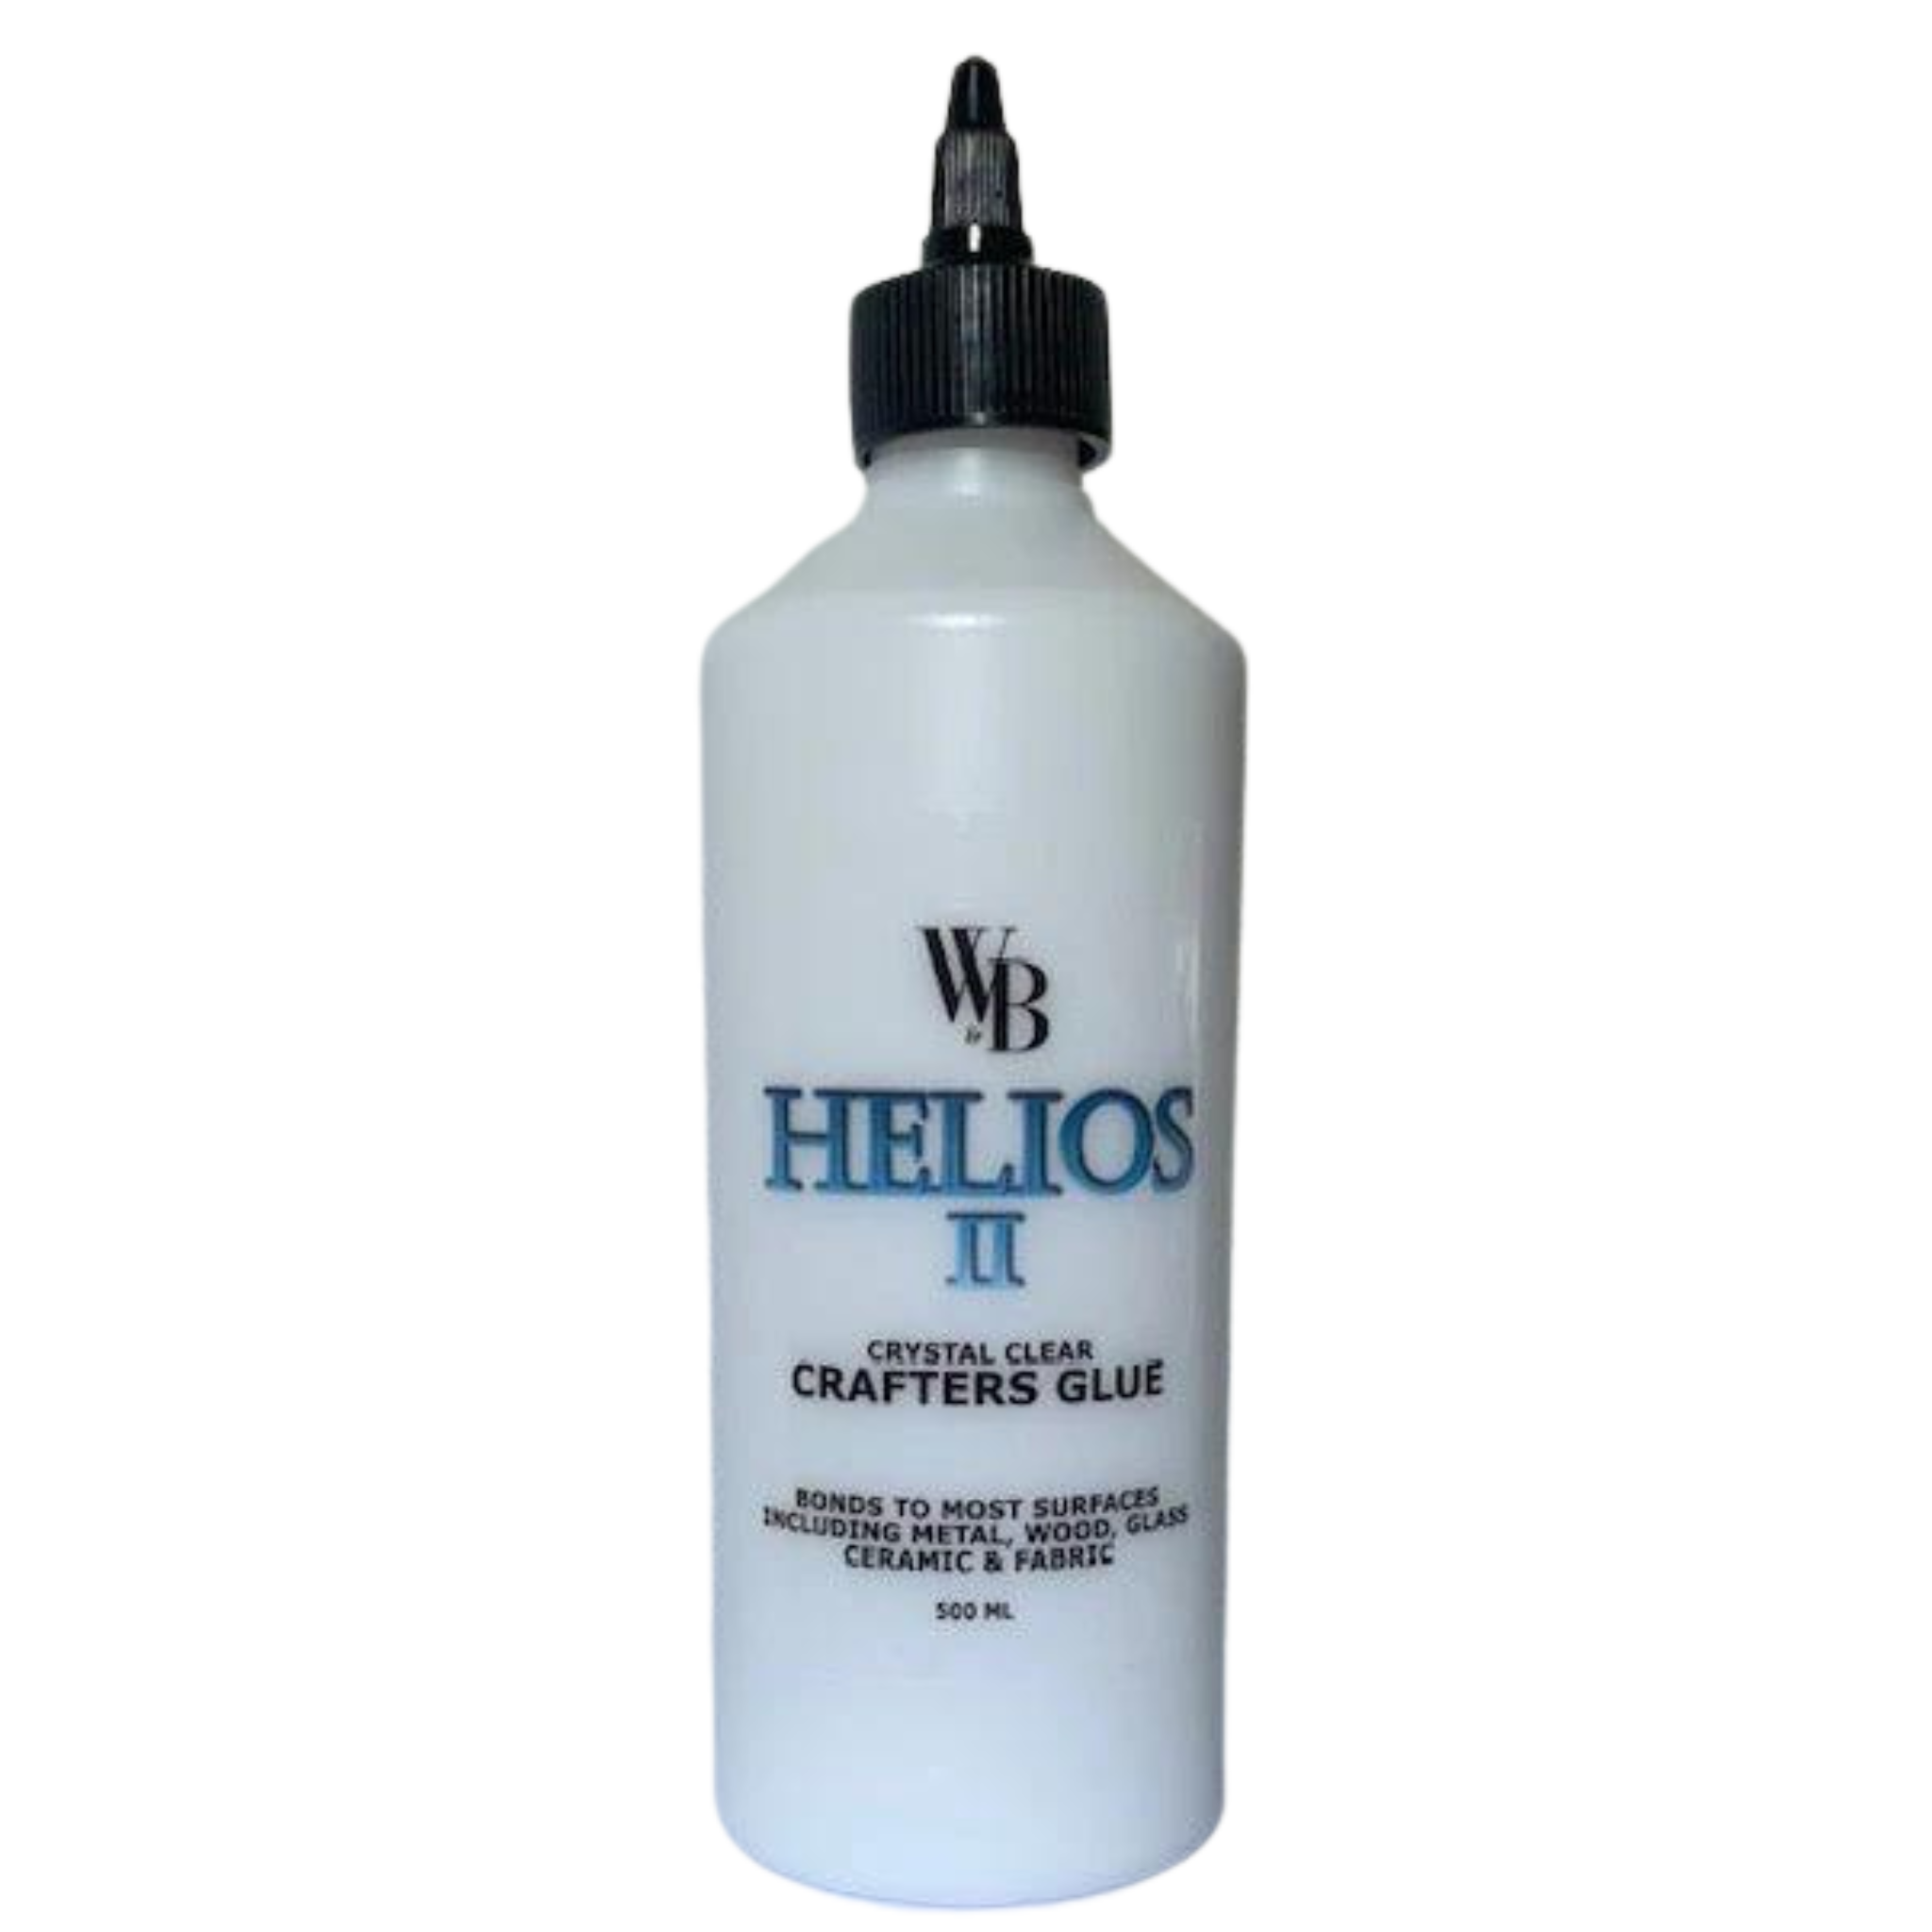 Helios II Crafters Glue